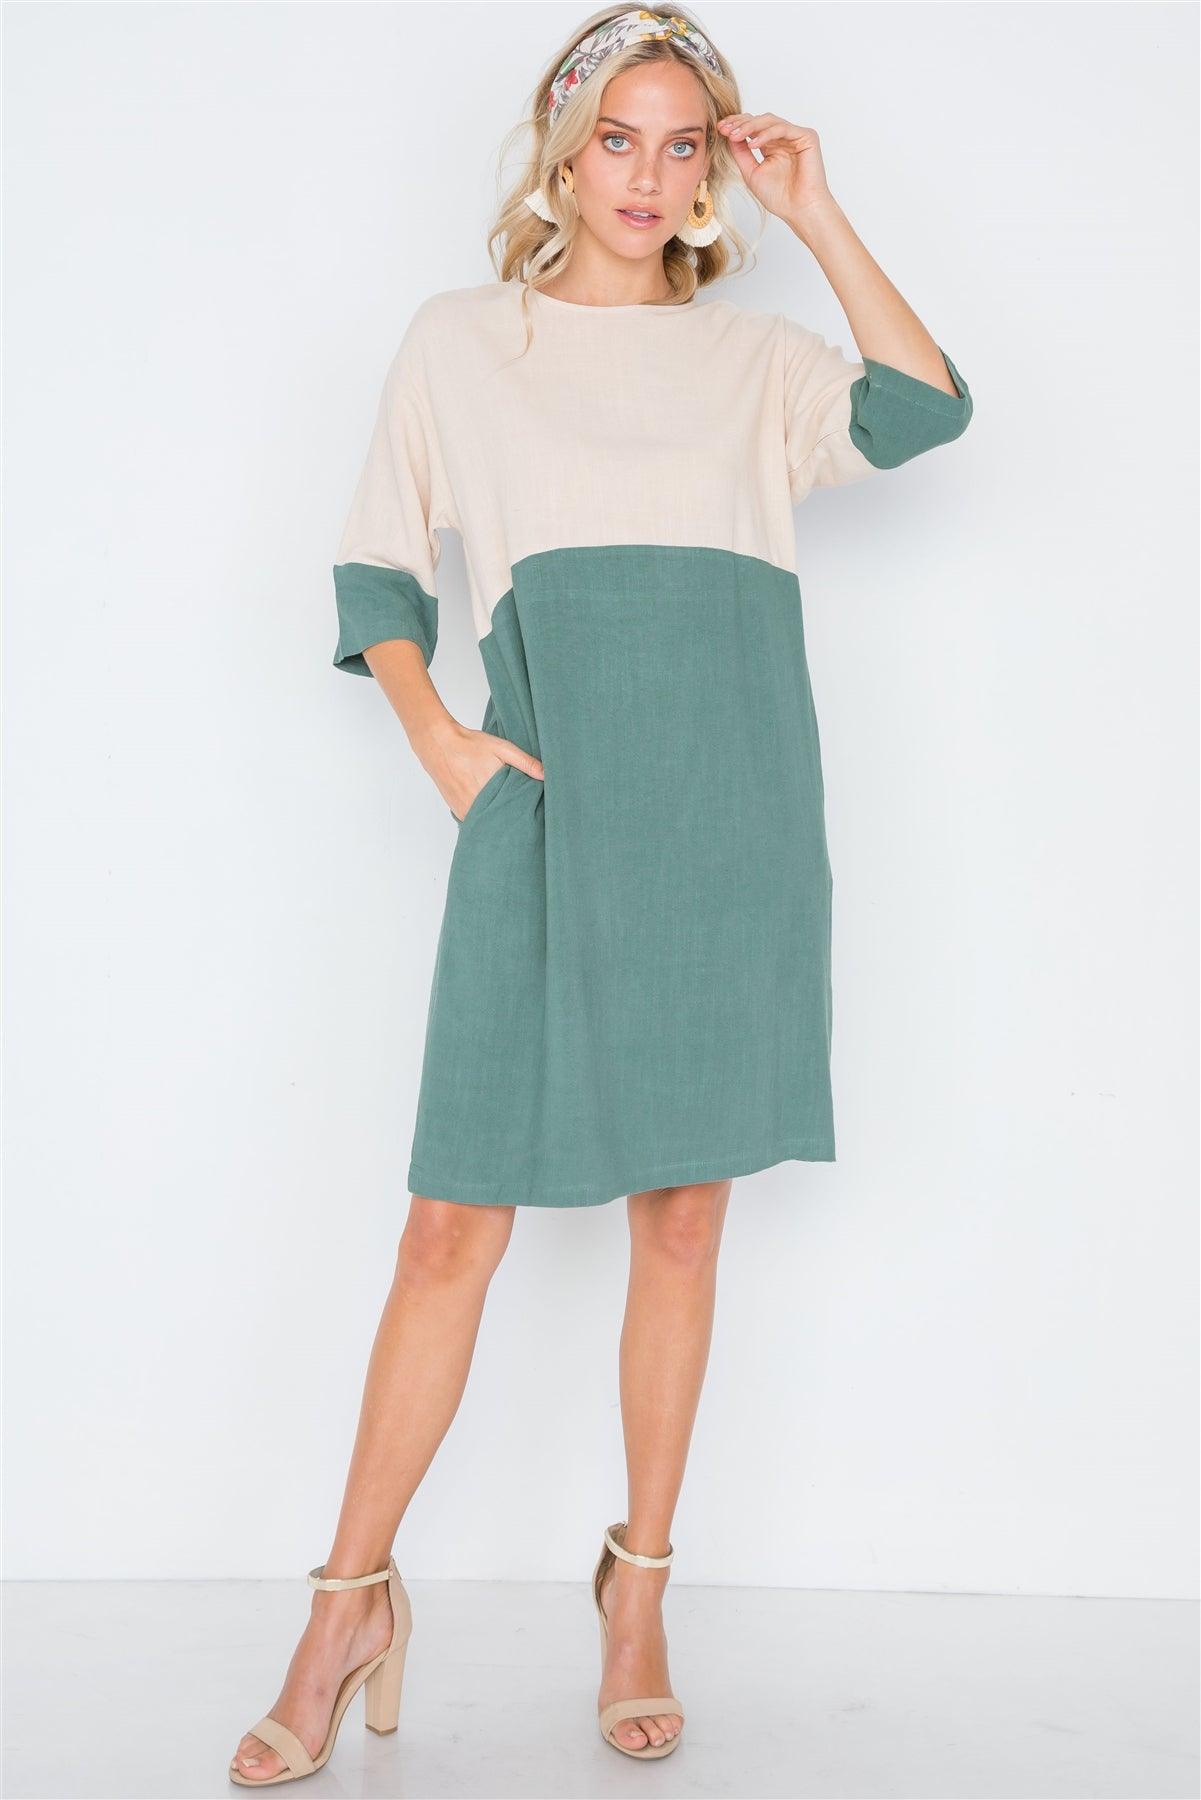 Heather Green 3/4 Sleeve Contrast Shift Boho Dress /2-2-2